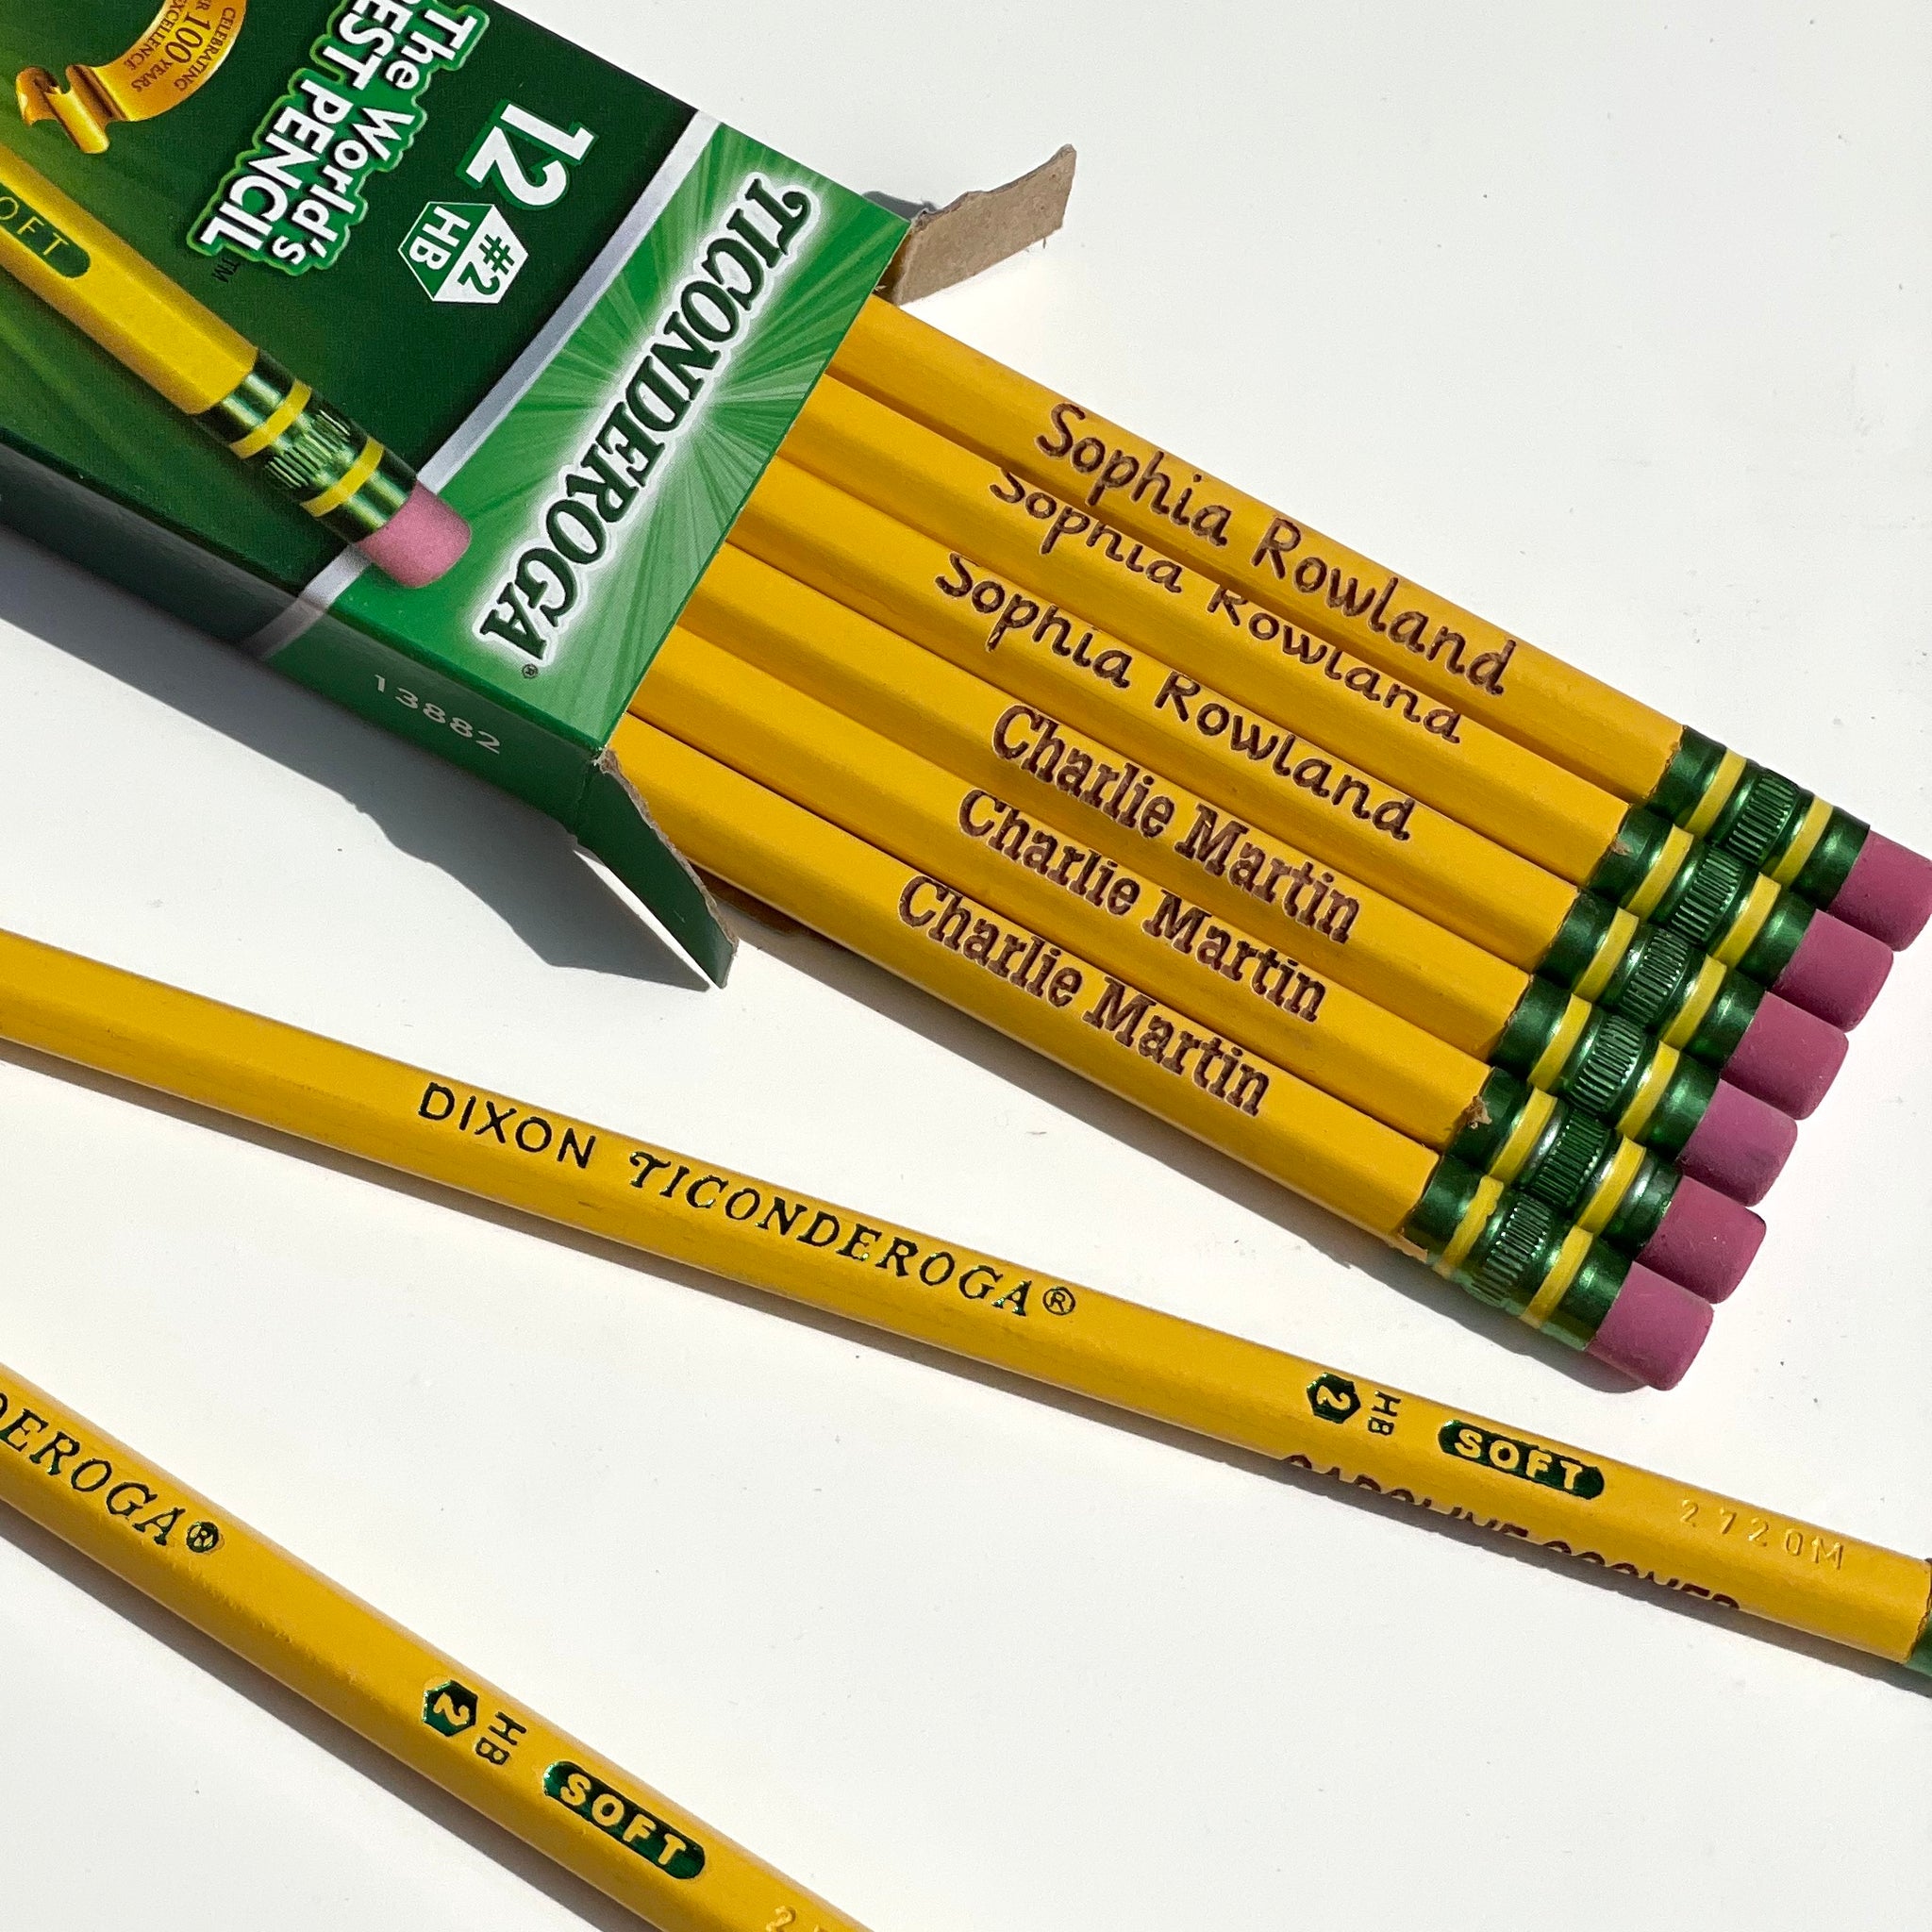 Personalized Engraved Ticonderoga #2 Pencils – Whidden's Woodshop